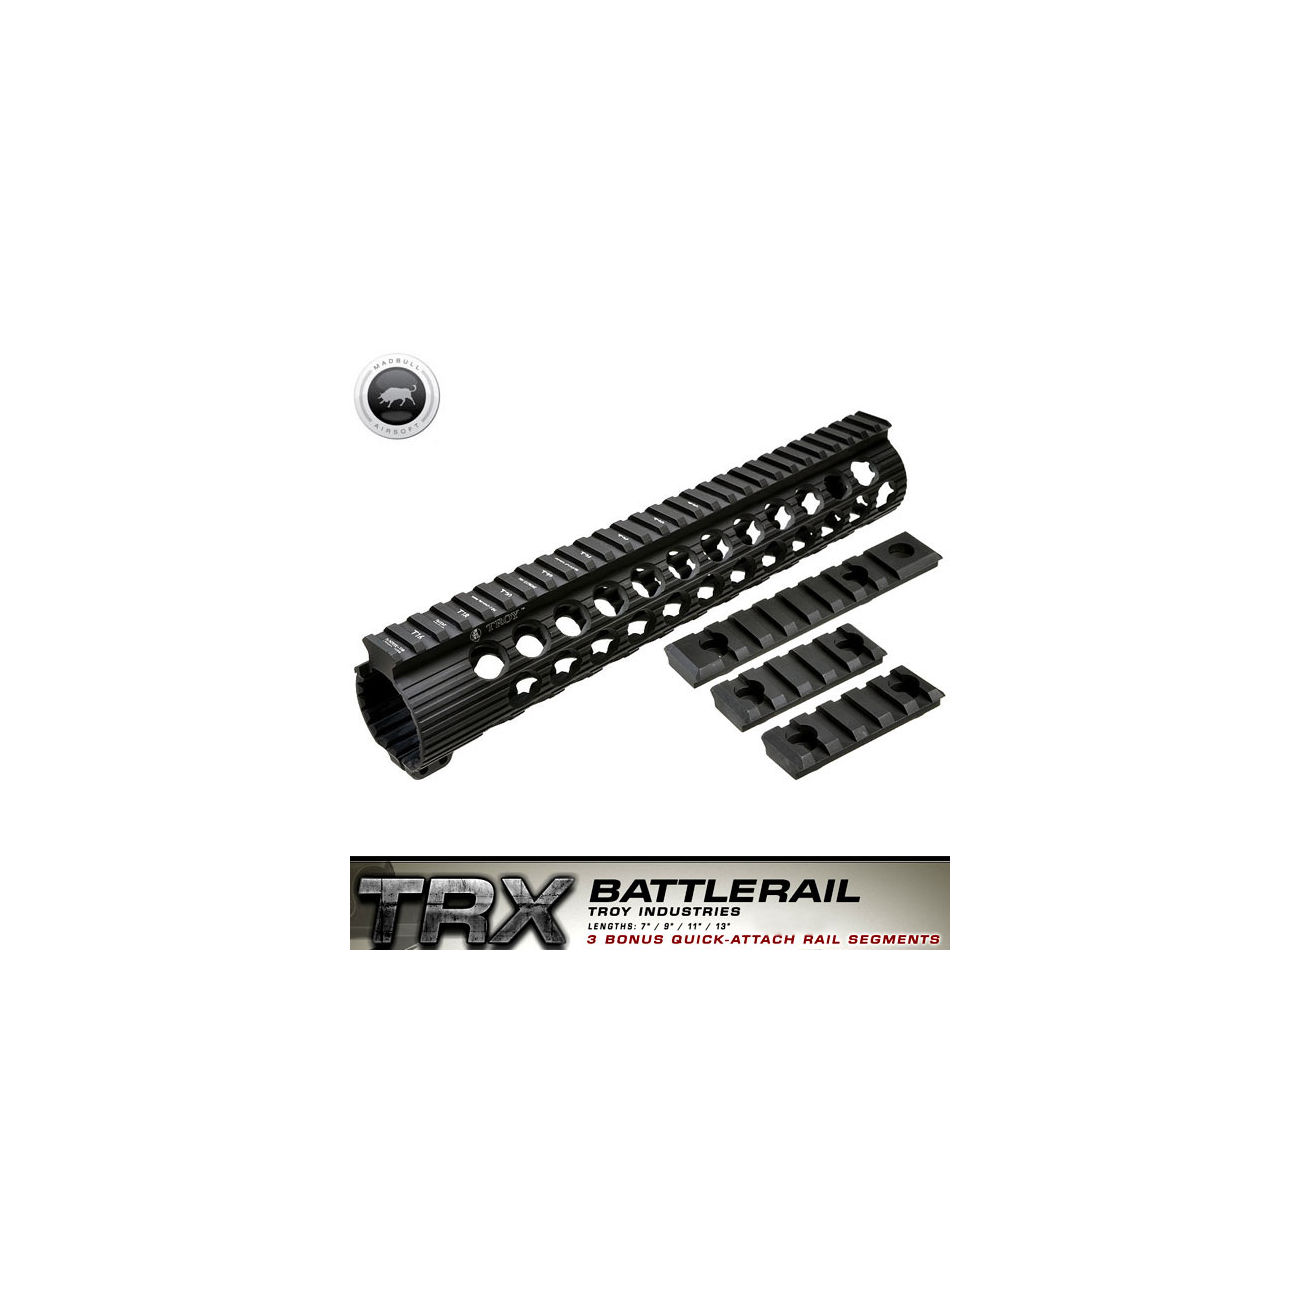 MadBull / Troy M16 TRX Extreme Battlerail 11 Zoll schwarz